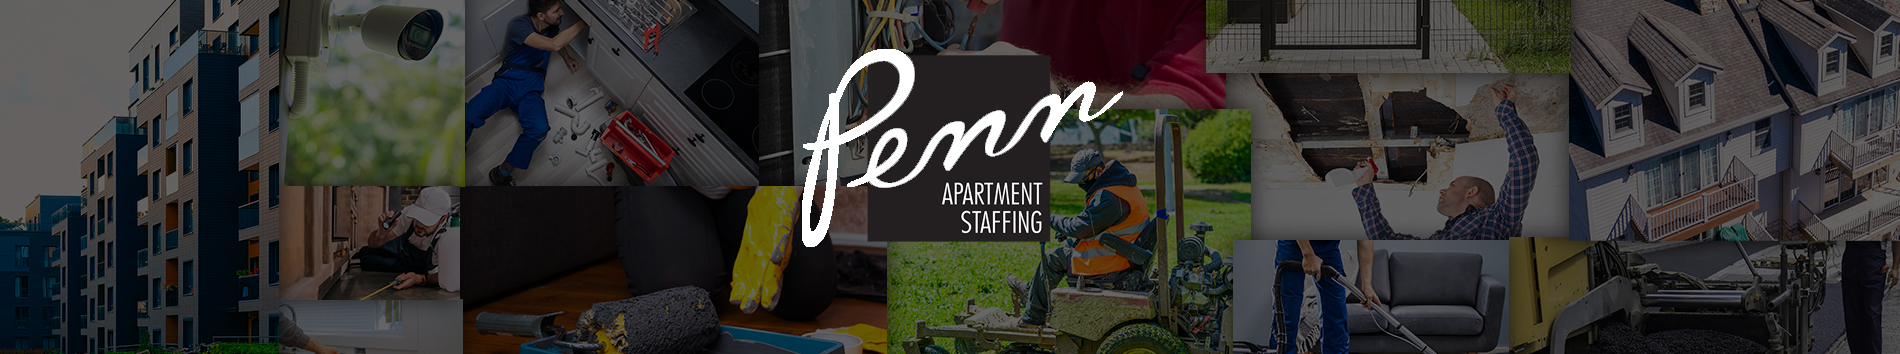 Penn Apartment Staffing, LLC